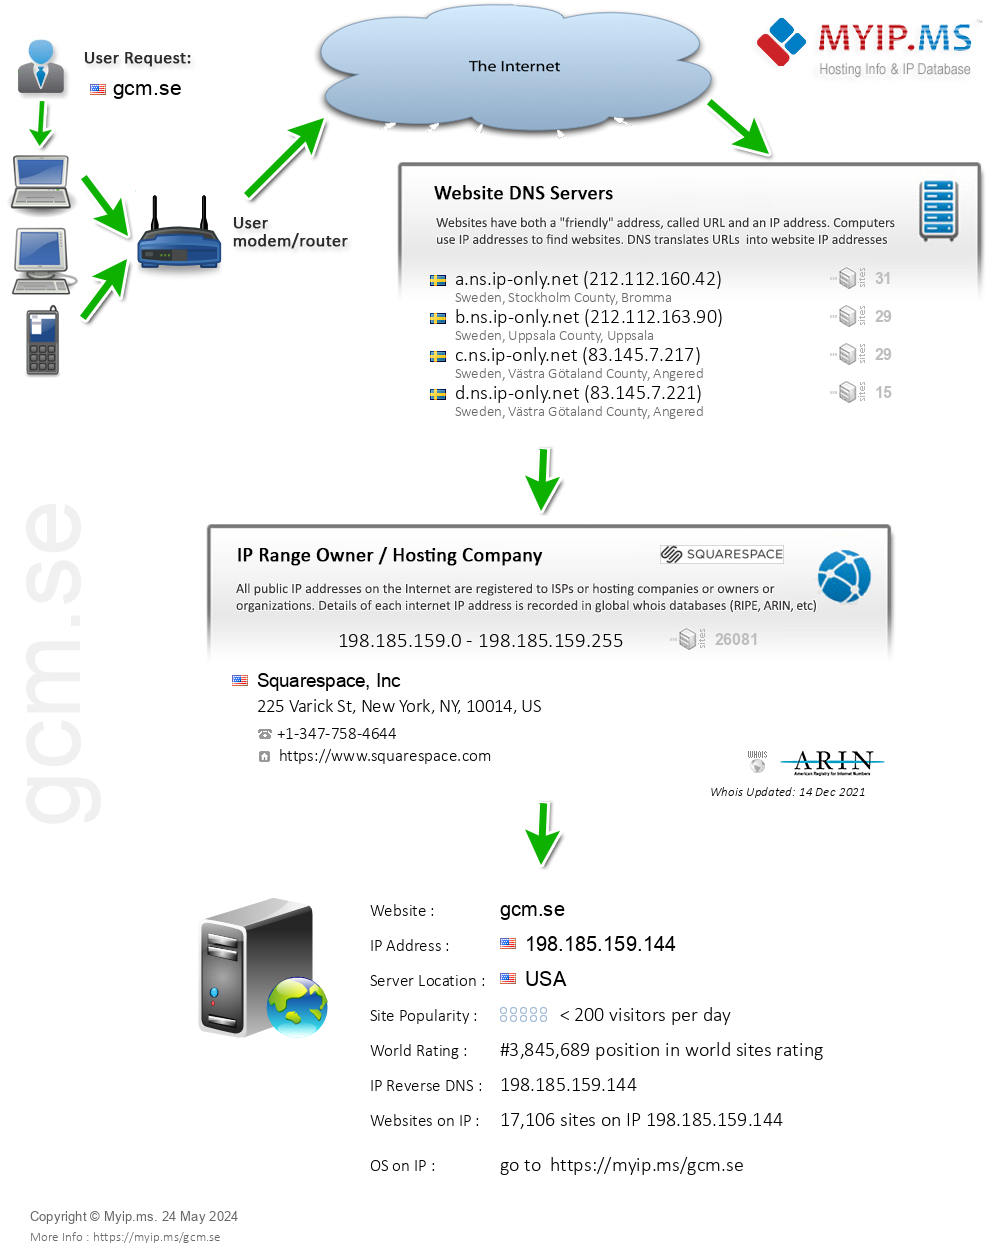 Gcm.se - Website Hosting Visual IP Diagram